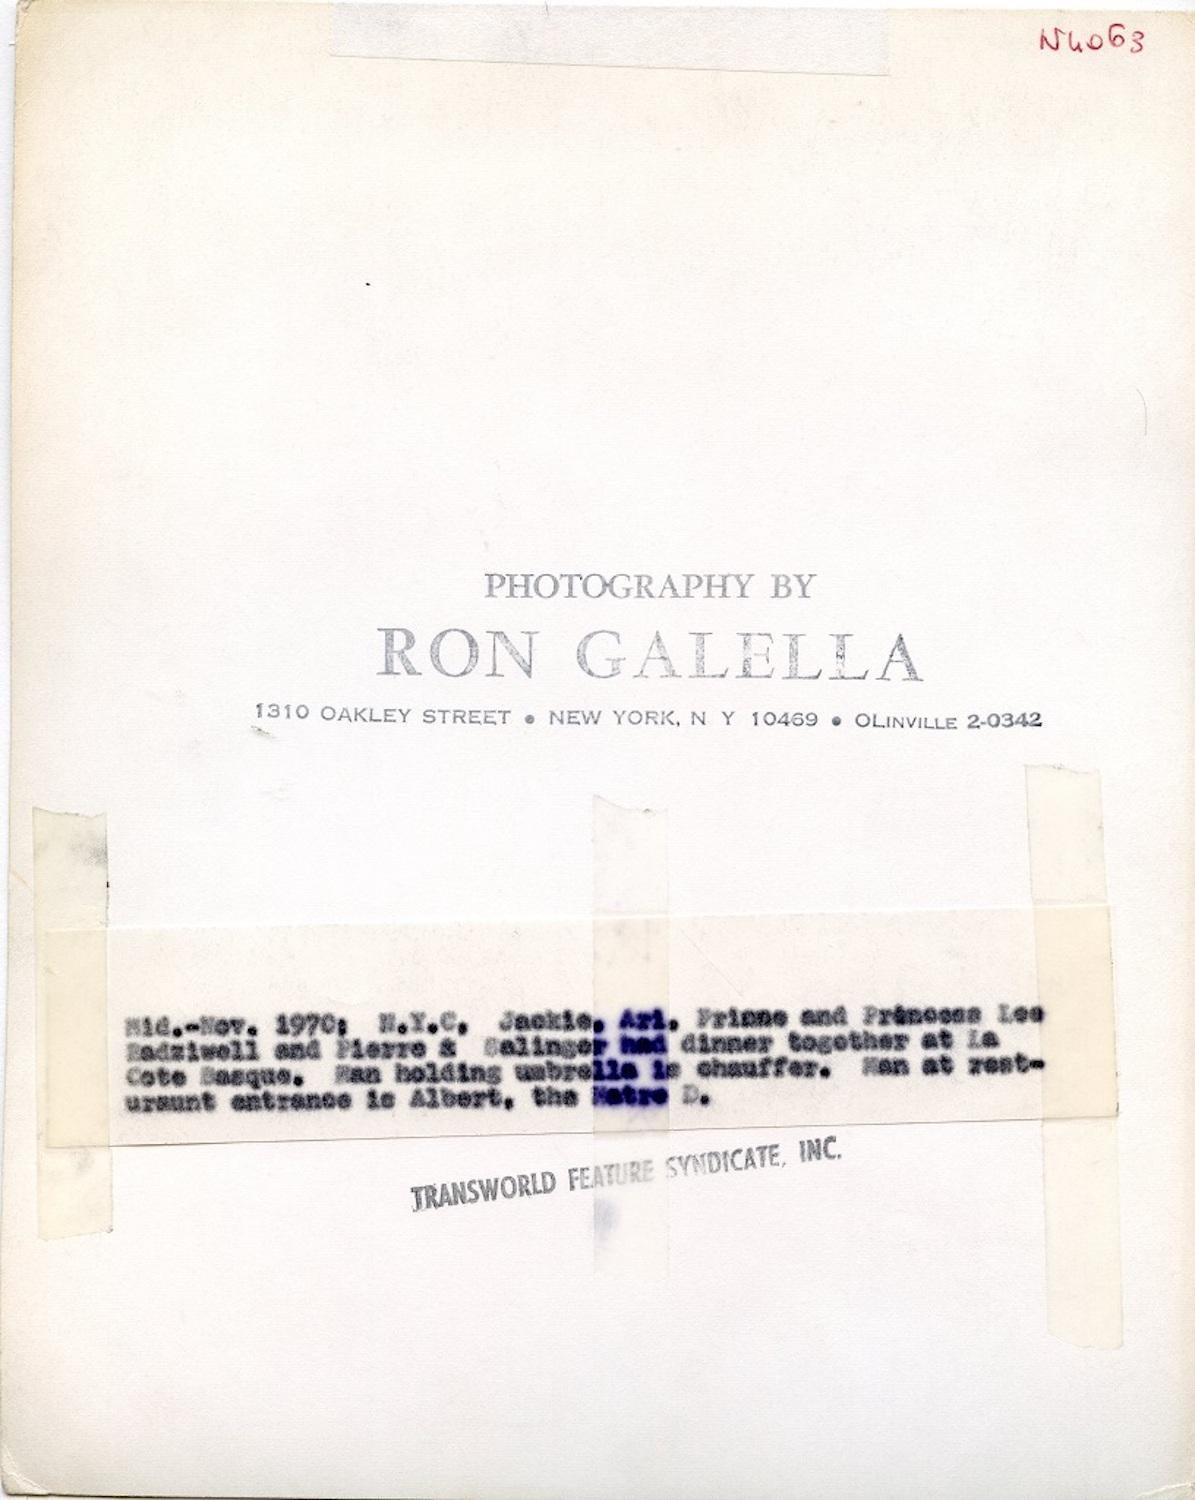 Onassis Under the Umbrella - Vintage Photo by Ron Galella - 1970 1